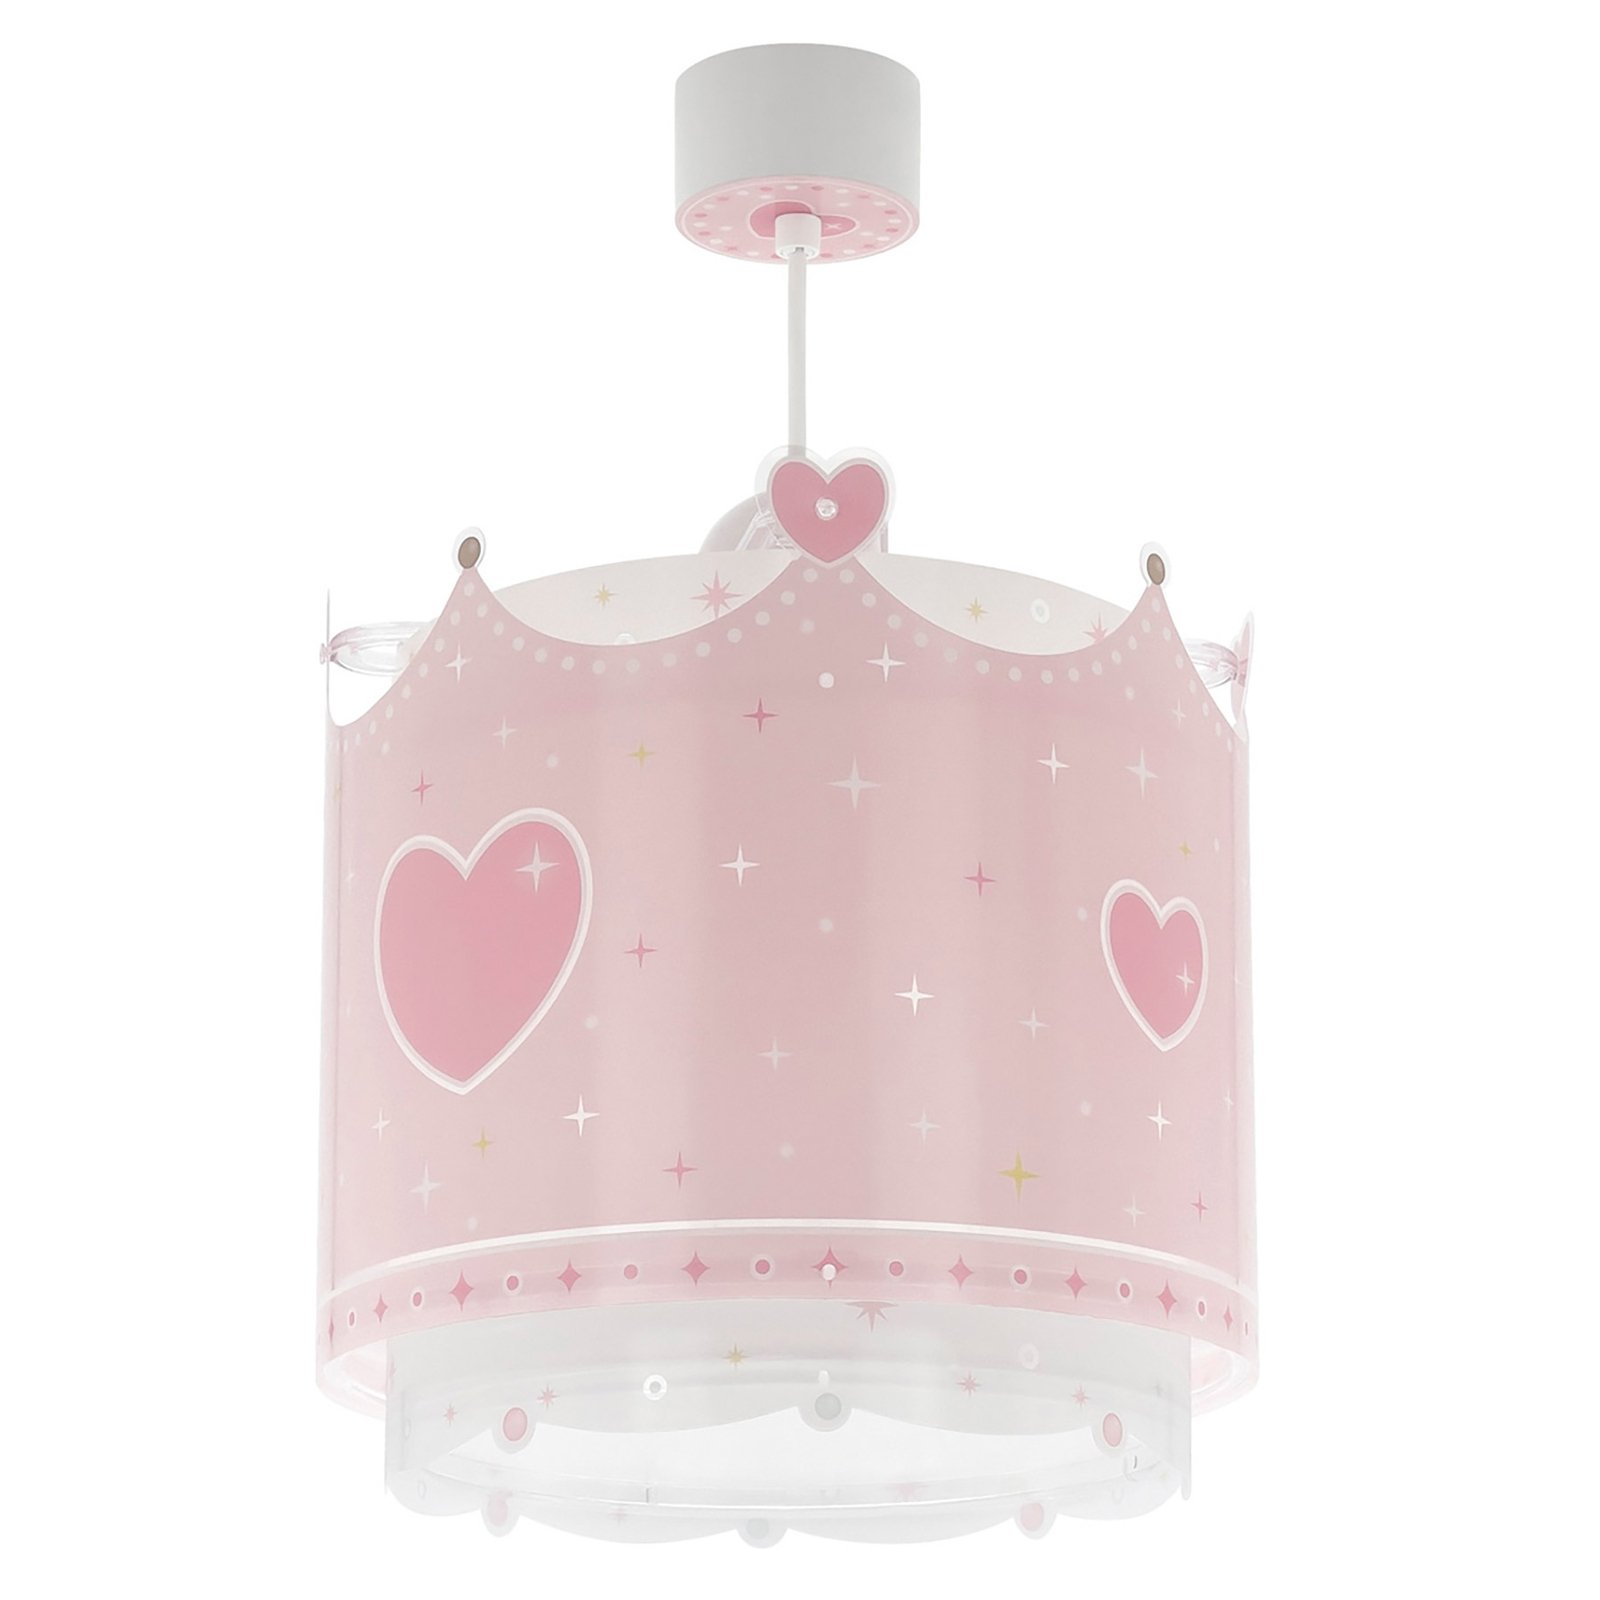 Dalber Little Queen pendant light in crown design